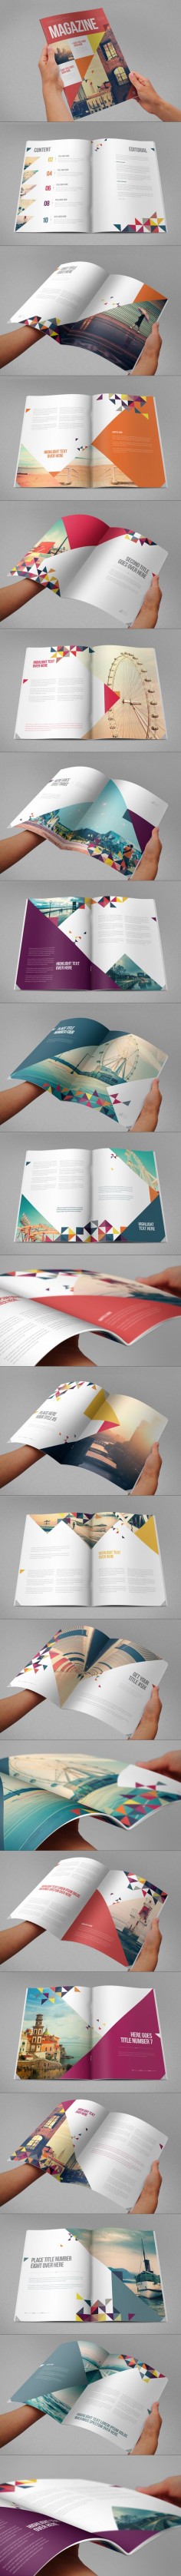 Modern Triangles Magazine by Abra Design, via Behance